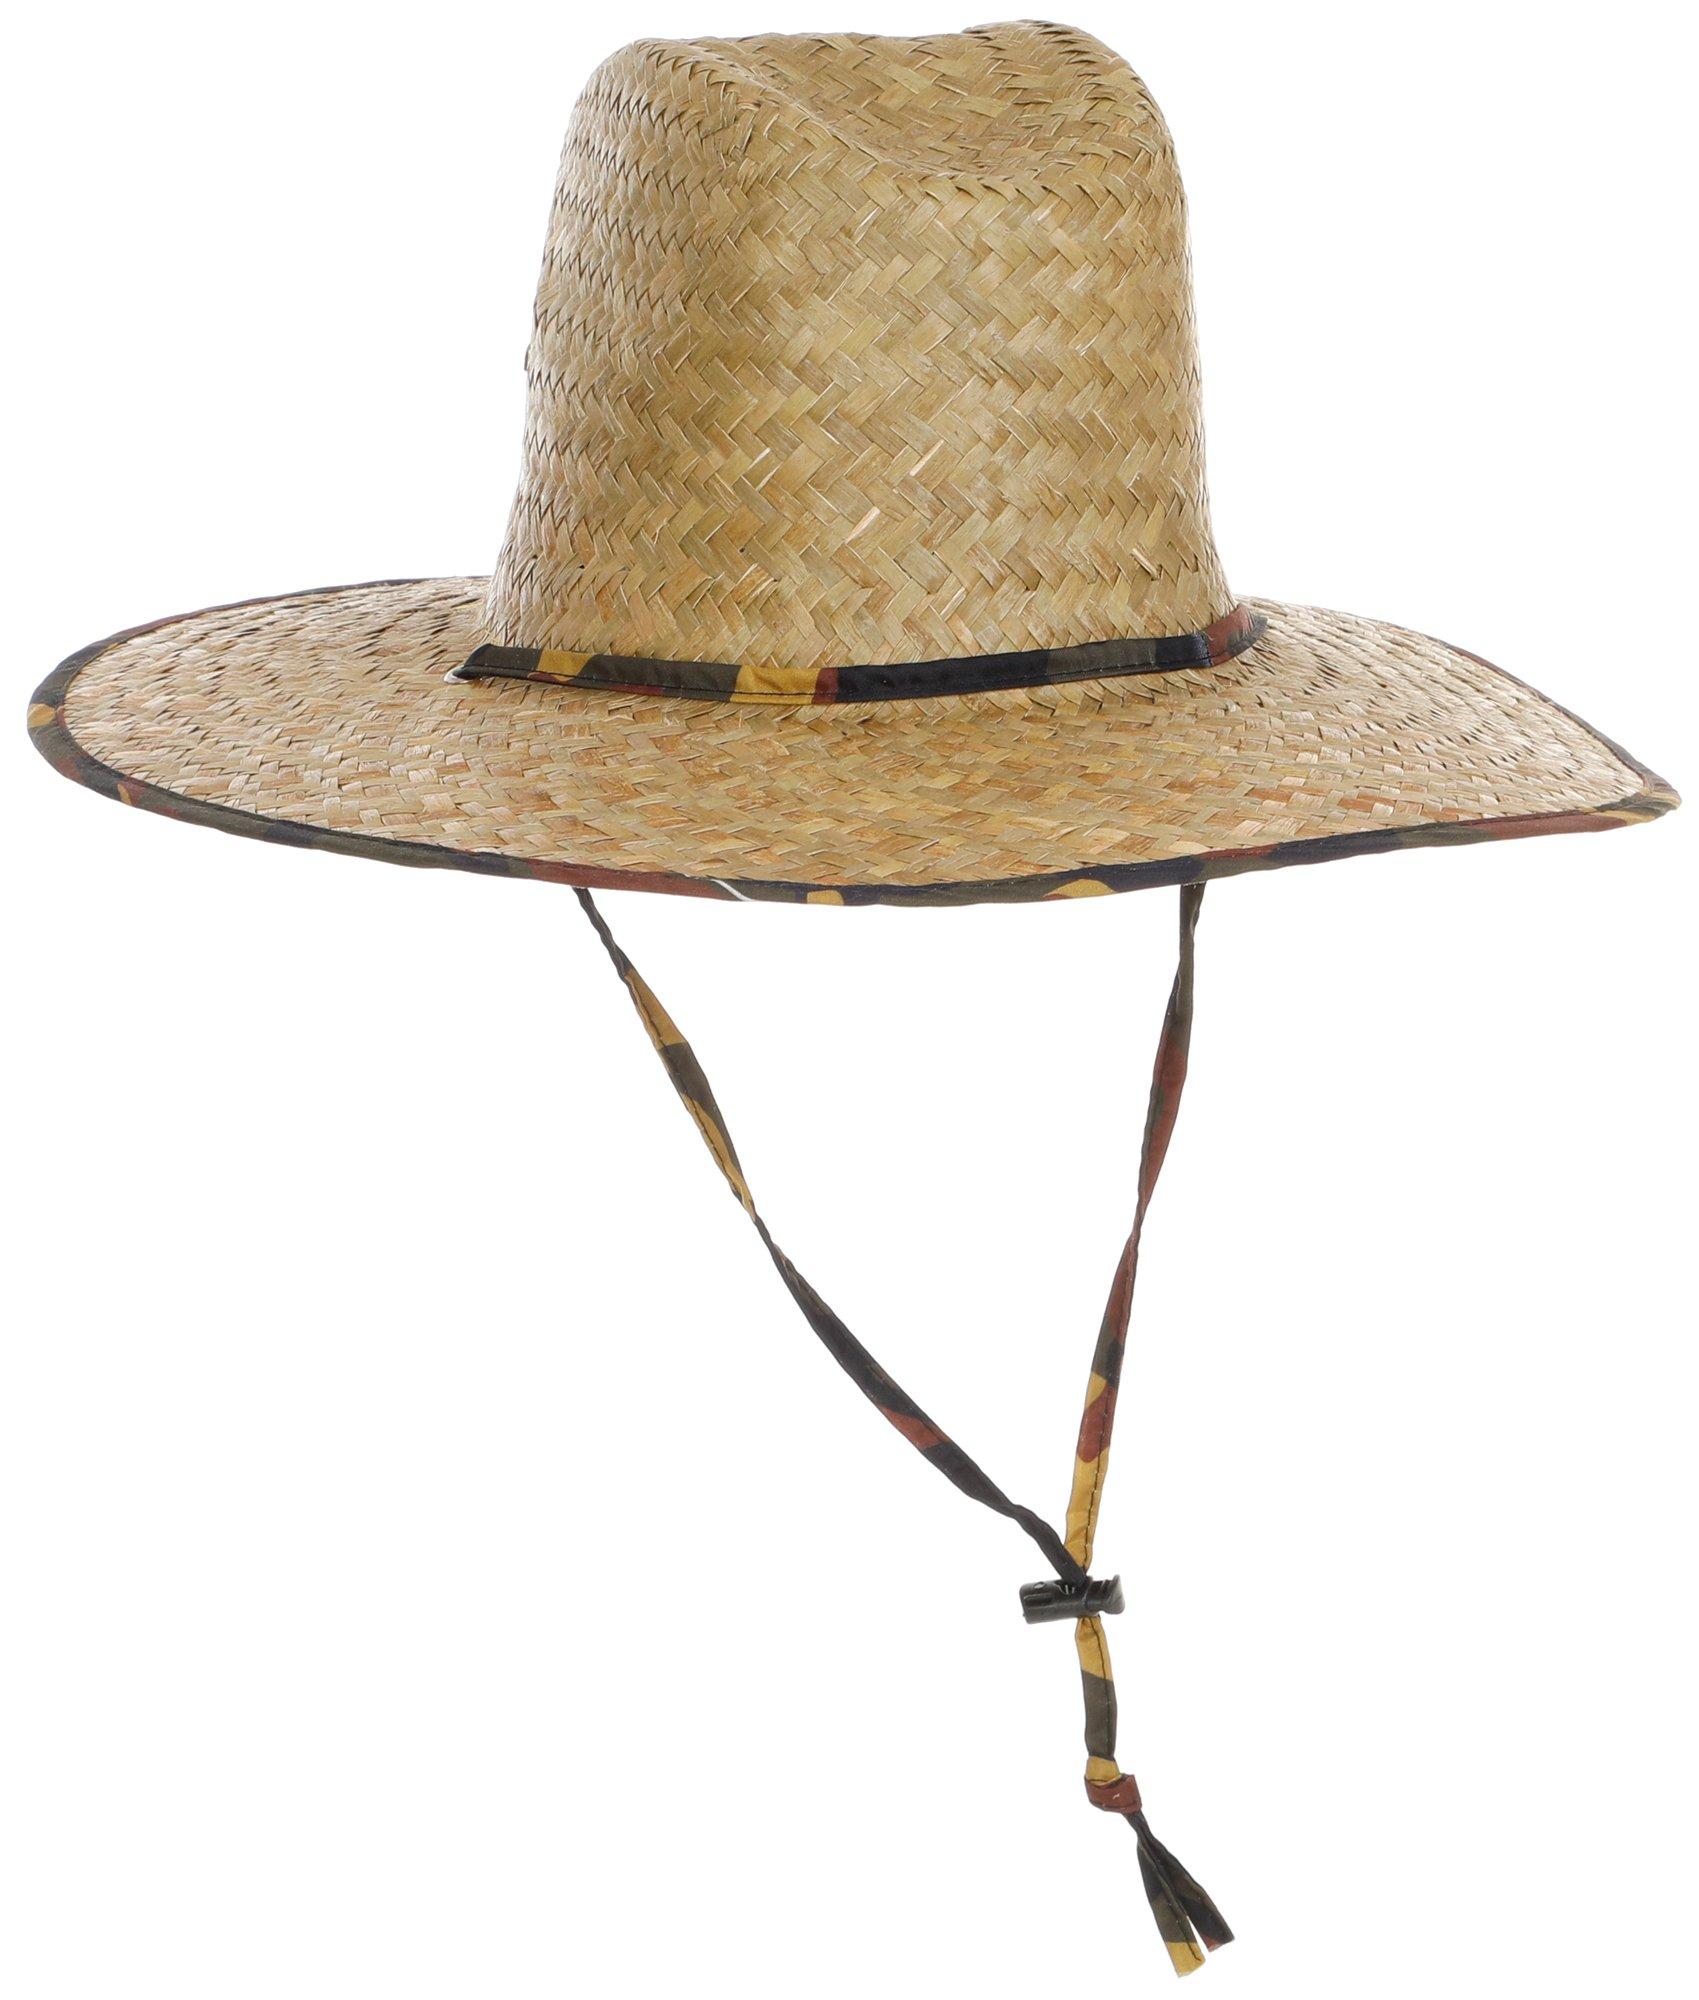 Men's Camo Brim Straw Hat